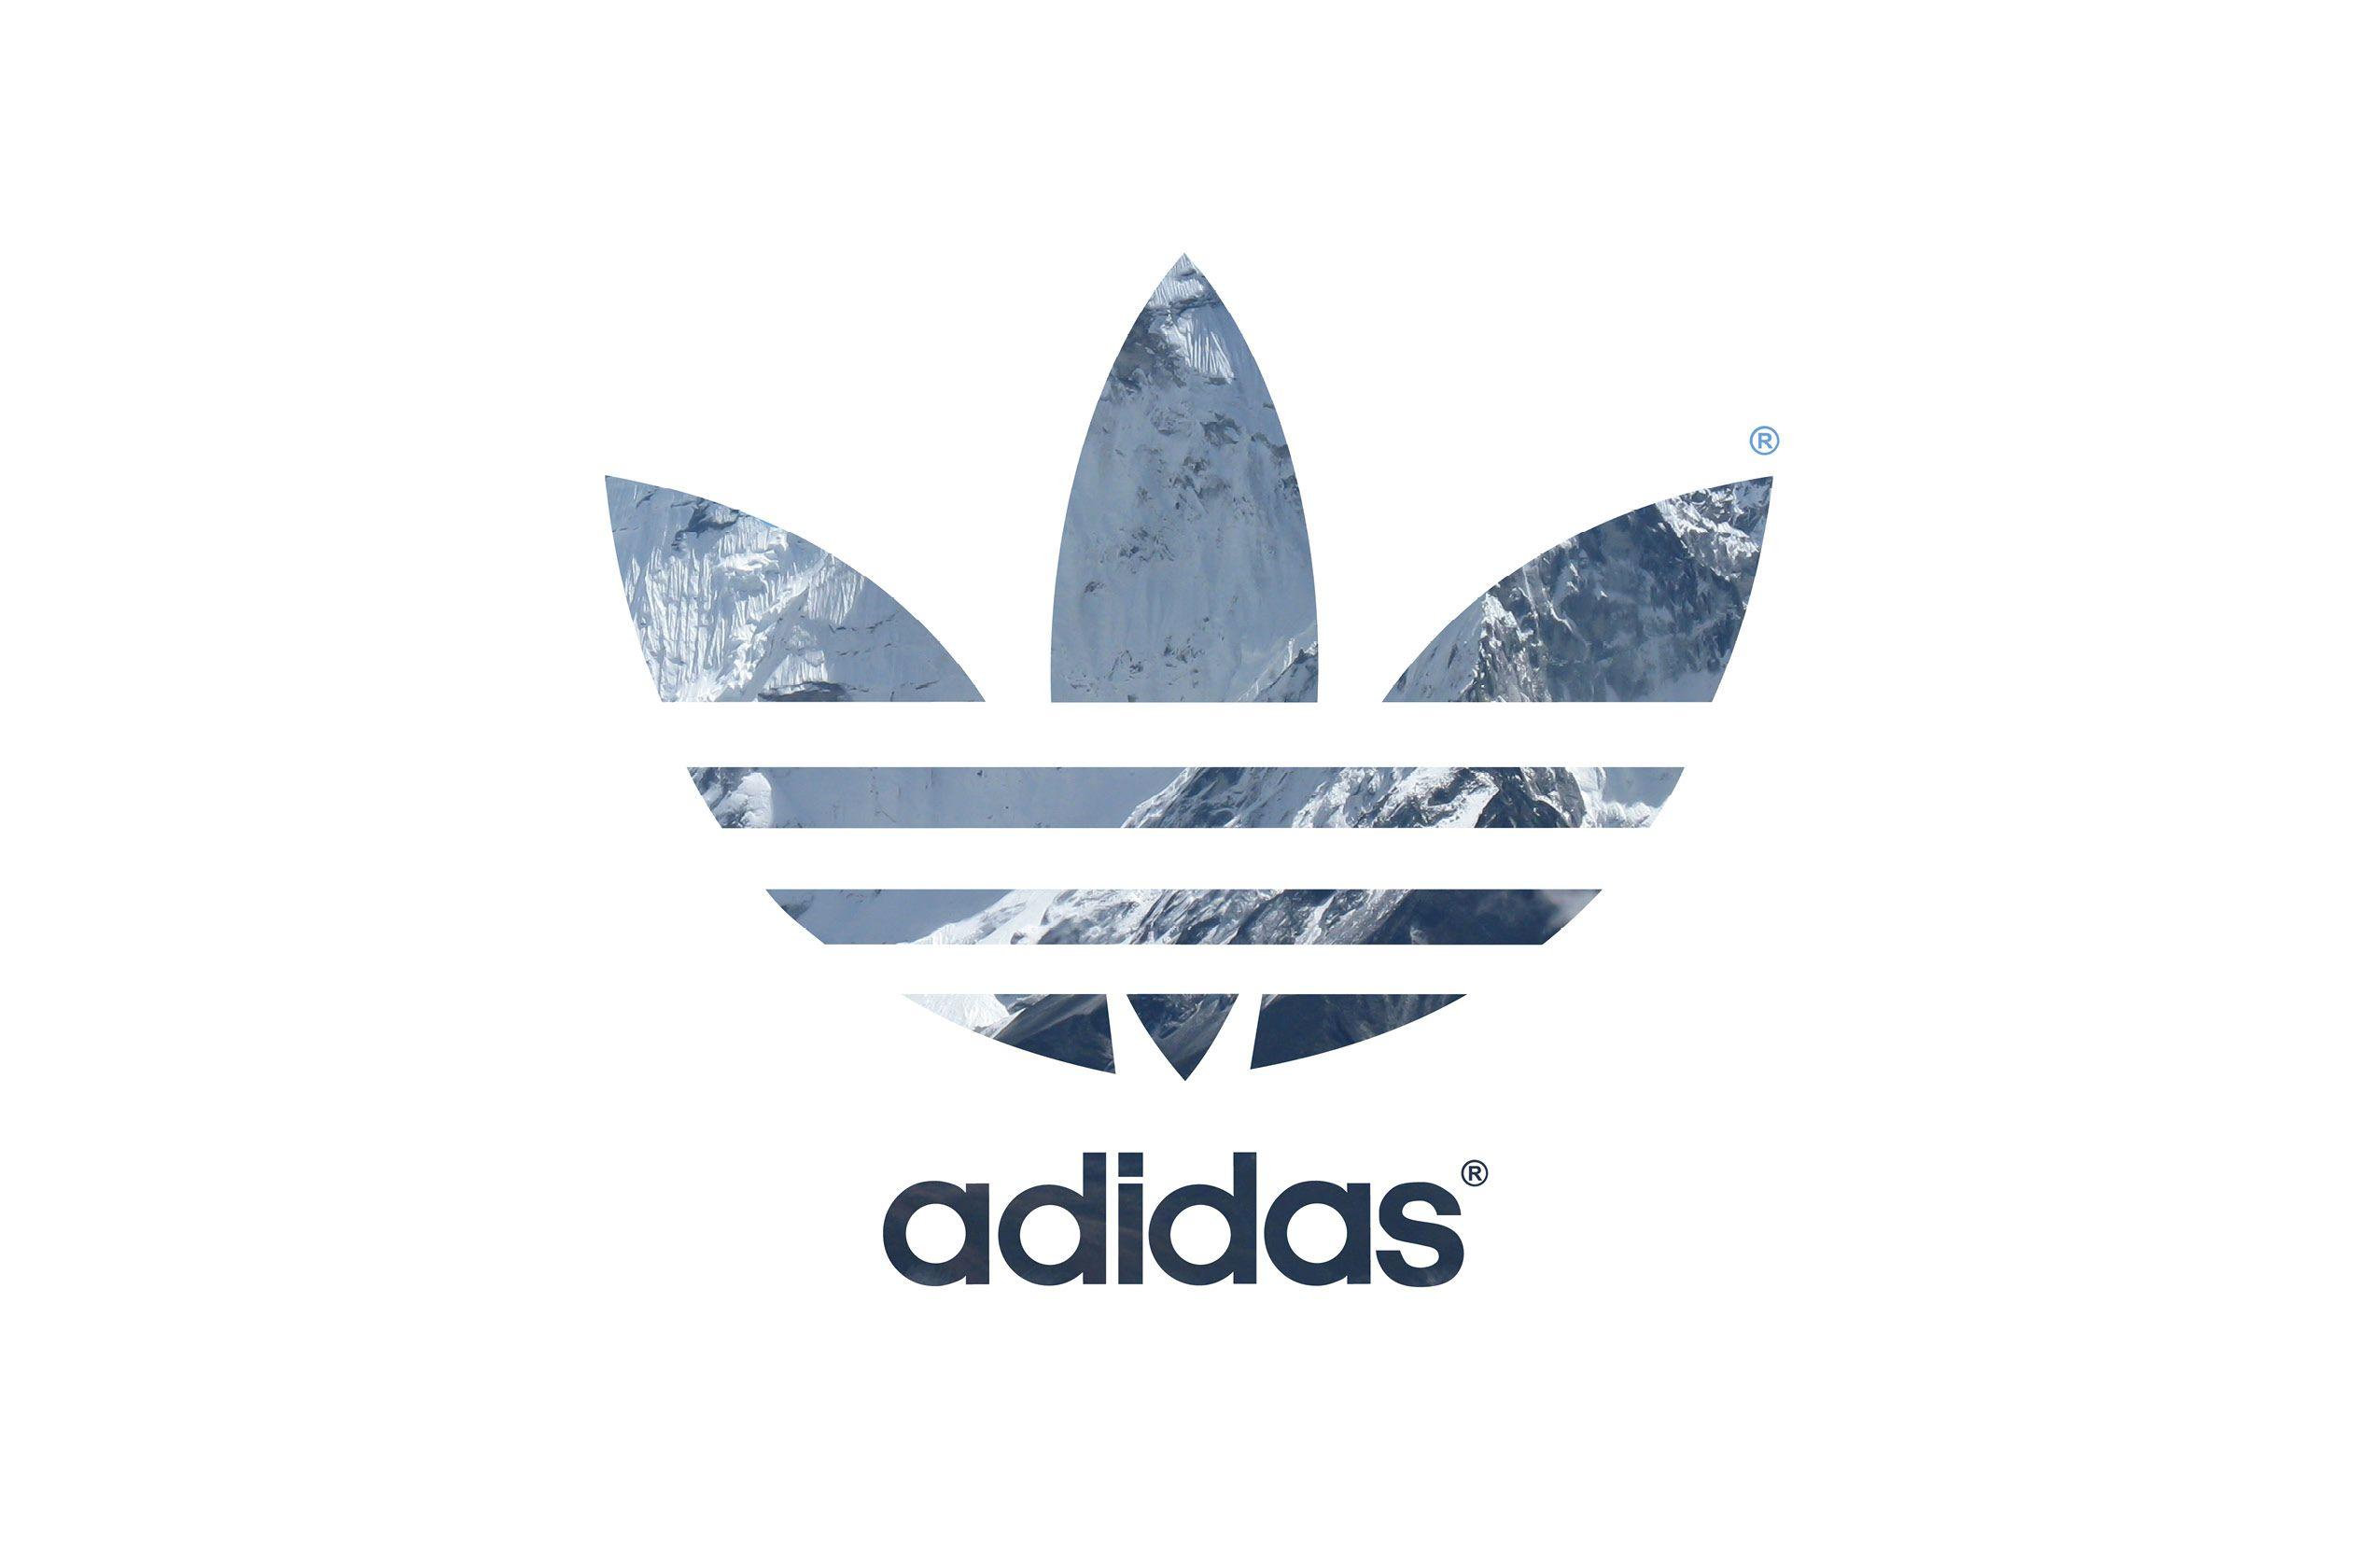 Adidas Logo Wallpaper. Adidas iphone wallpaper, Adidas